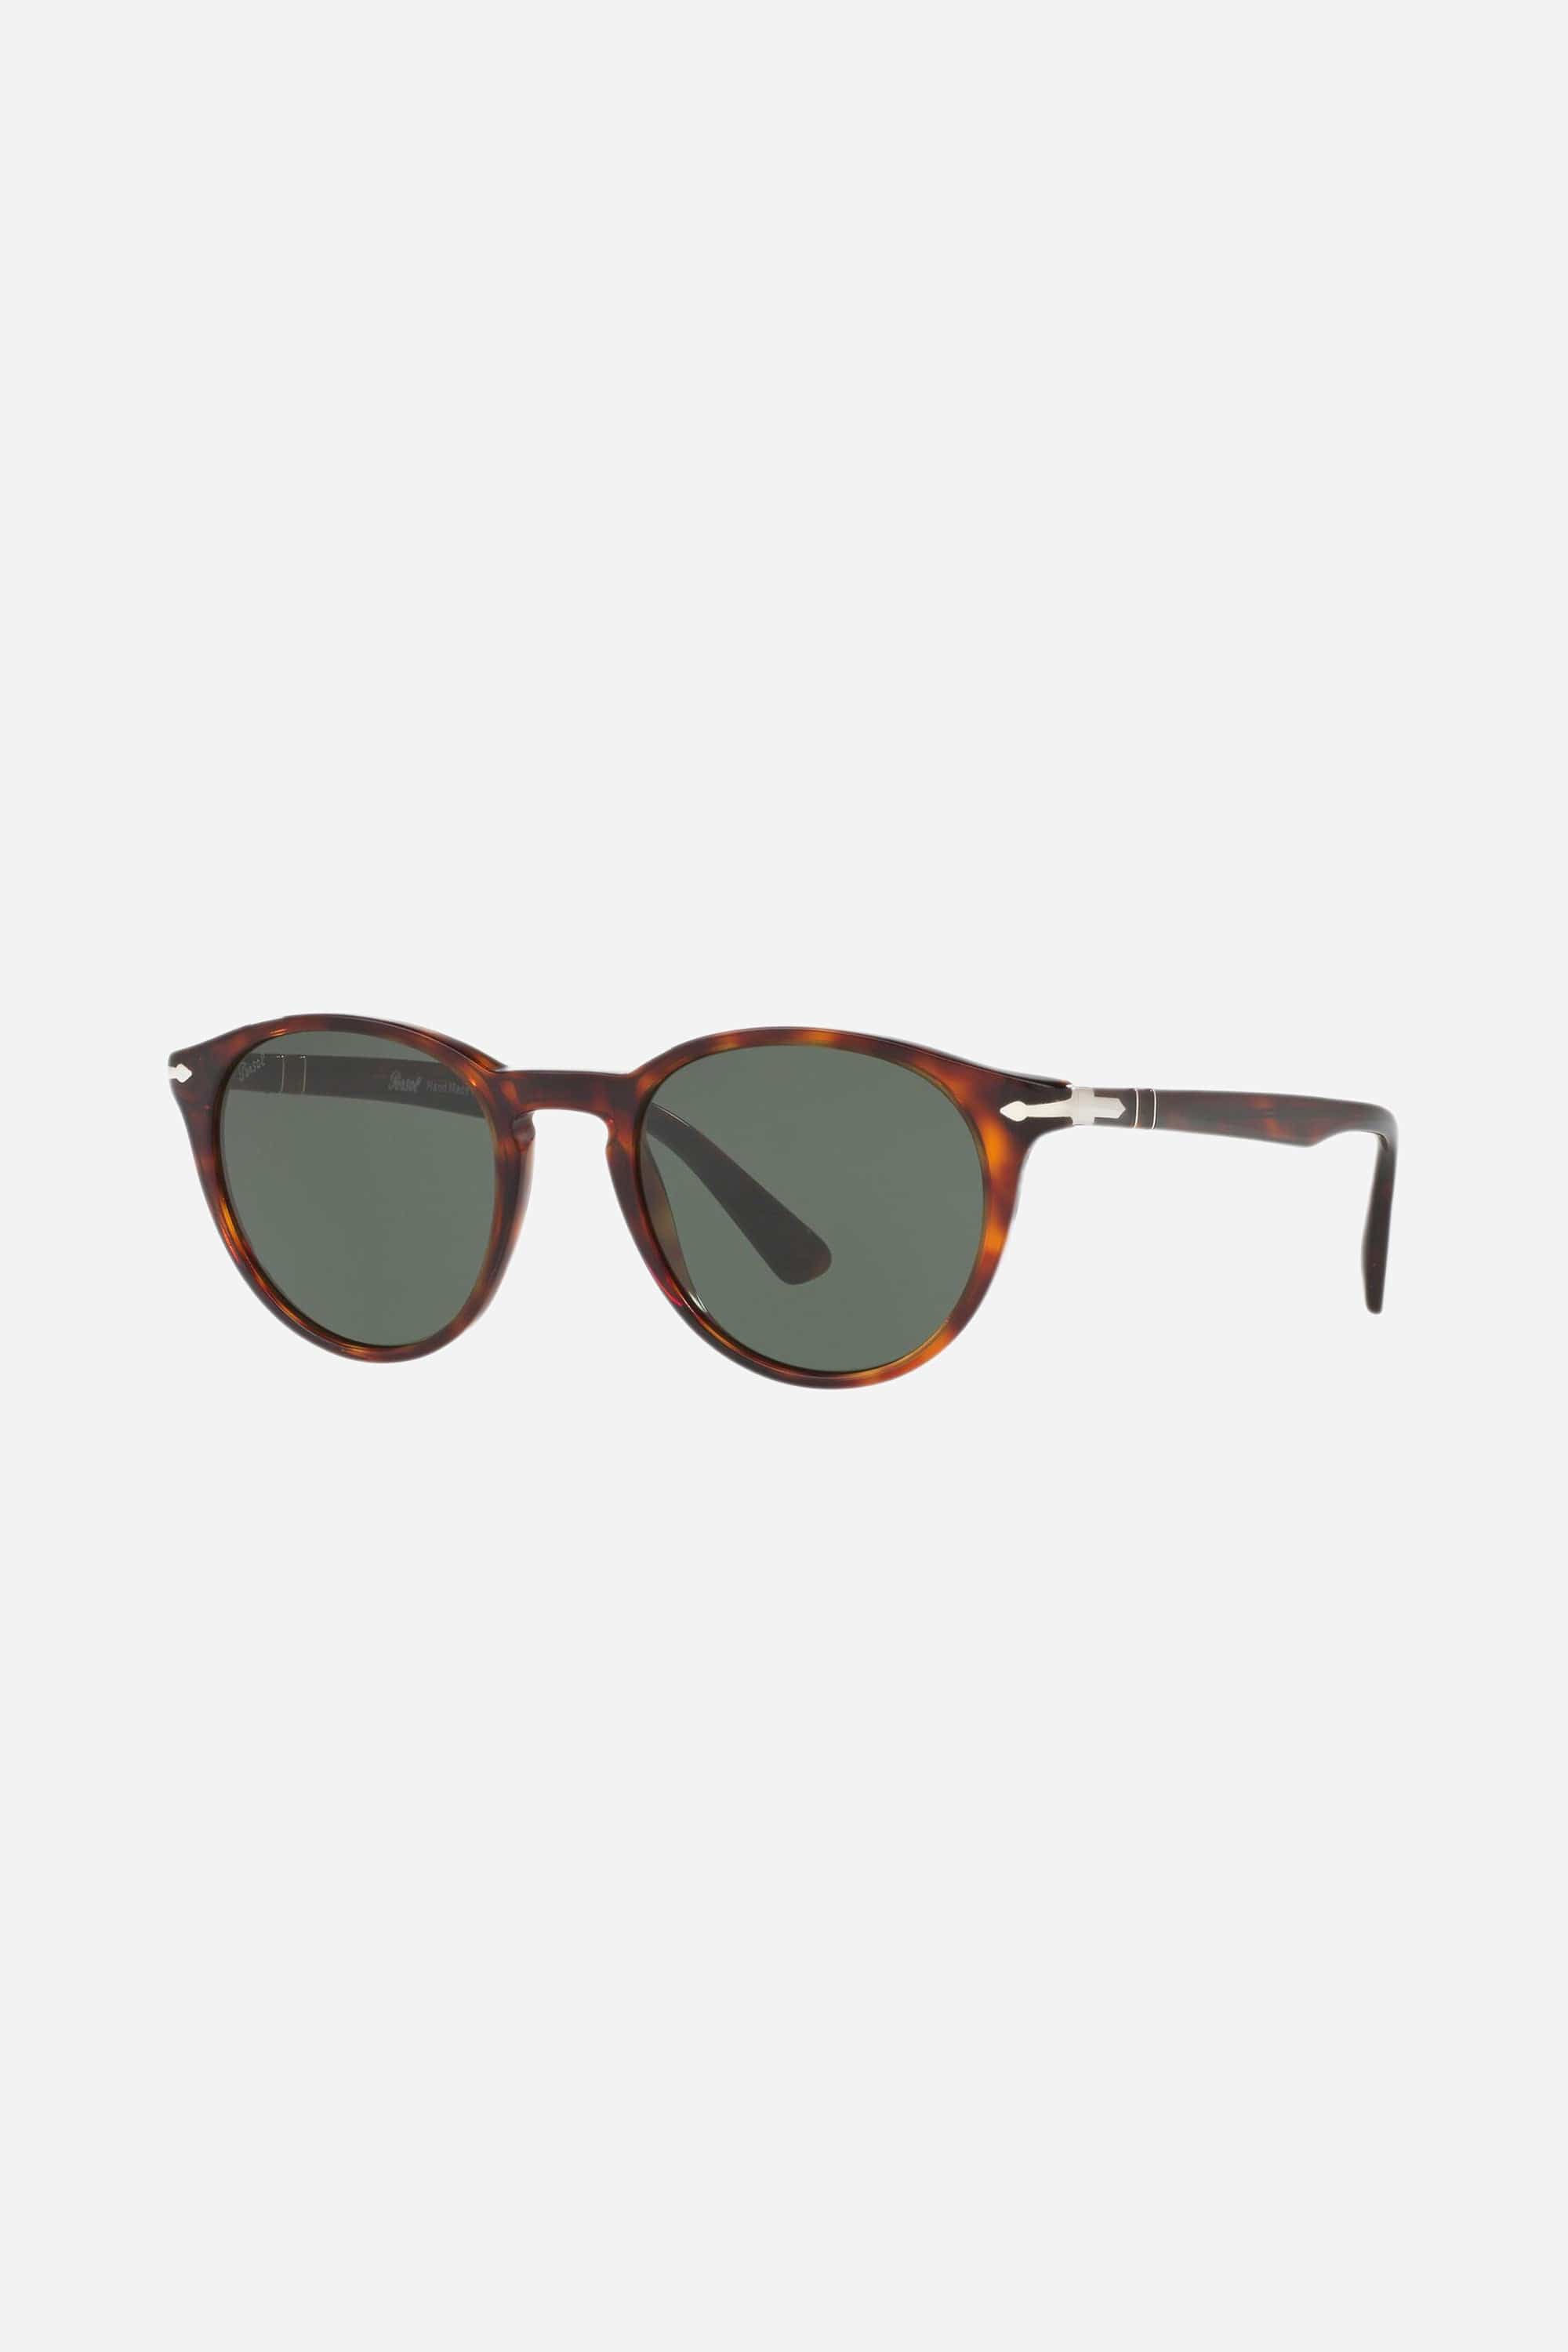 Persol round classic red havana sunglasses - Eyewear Club